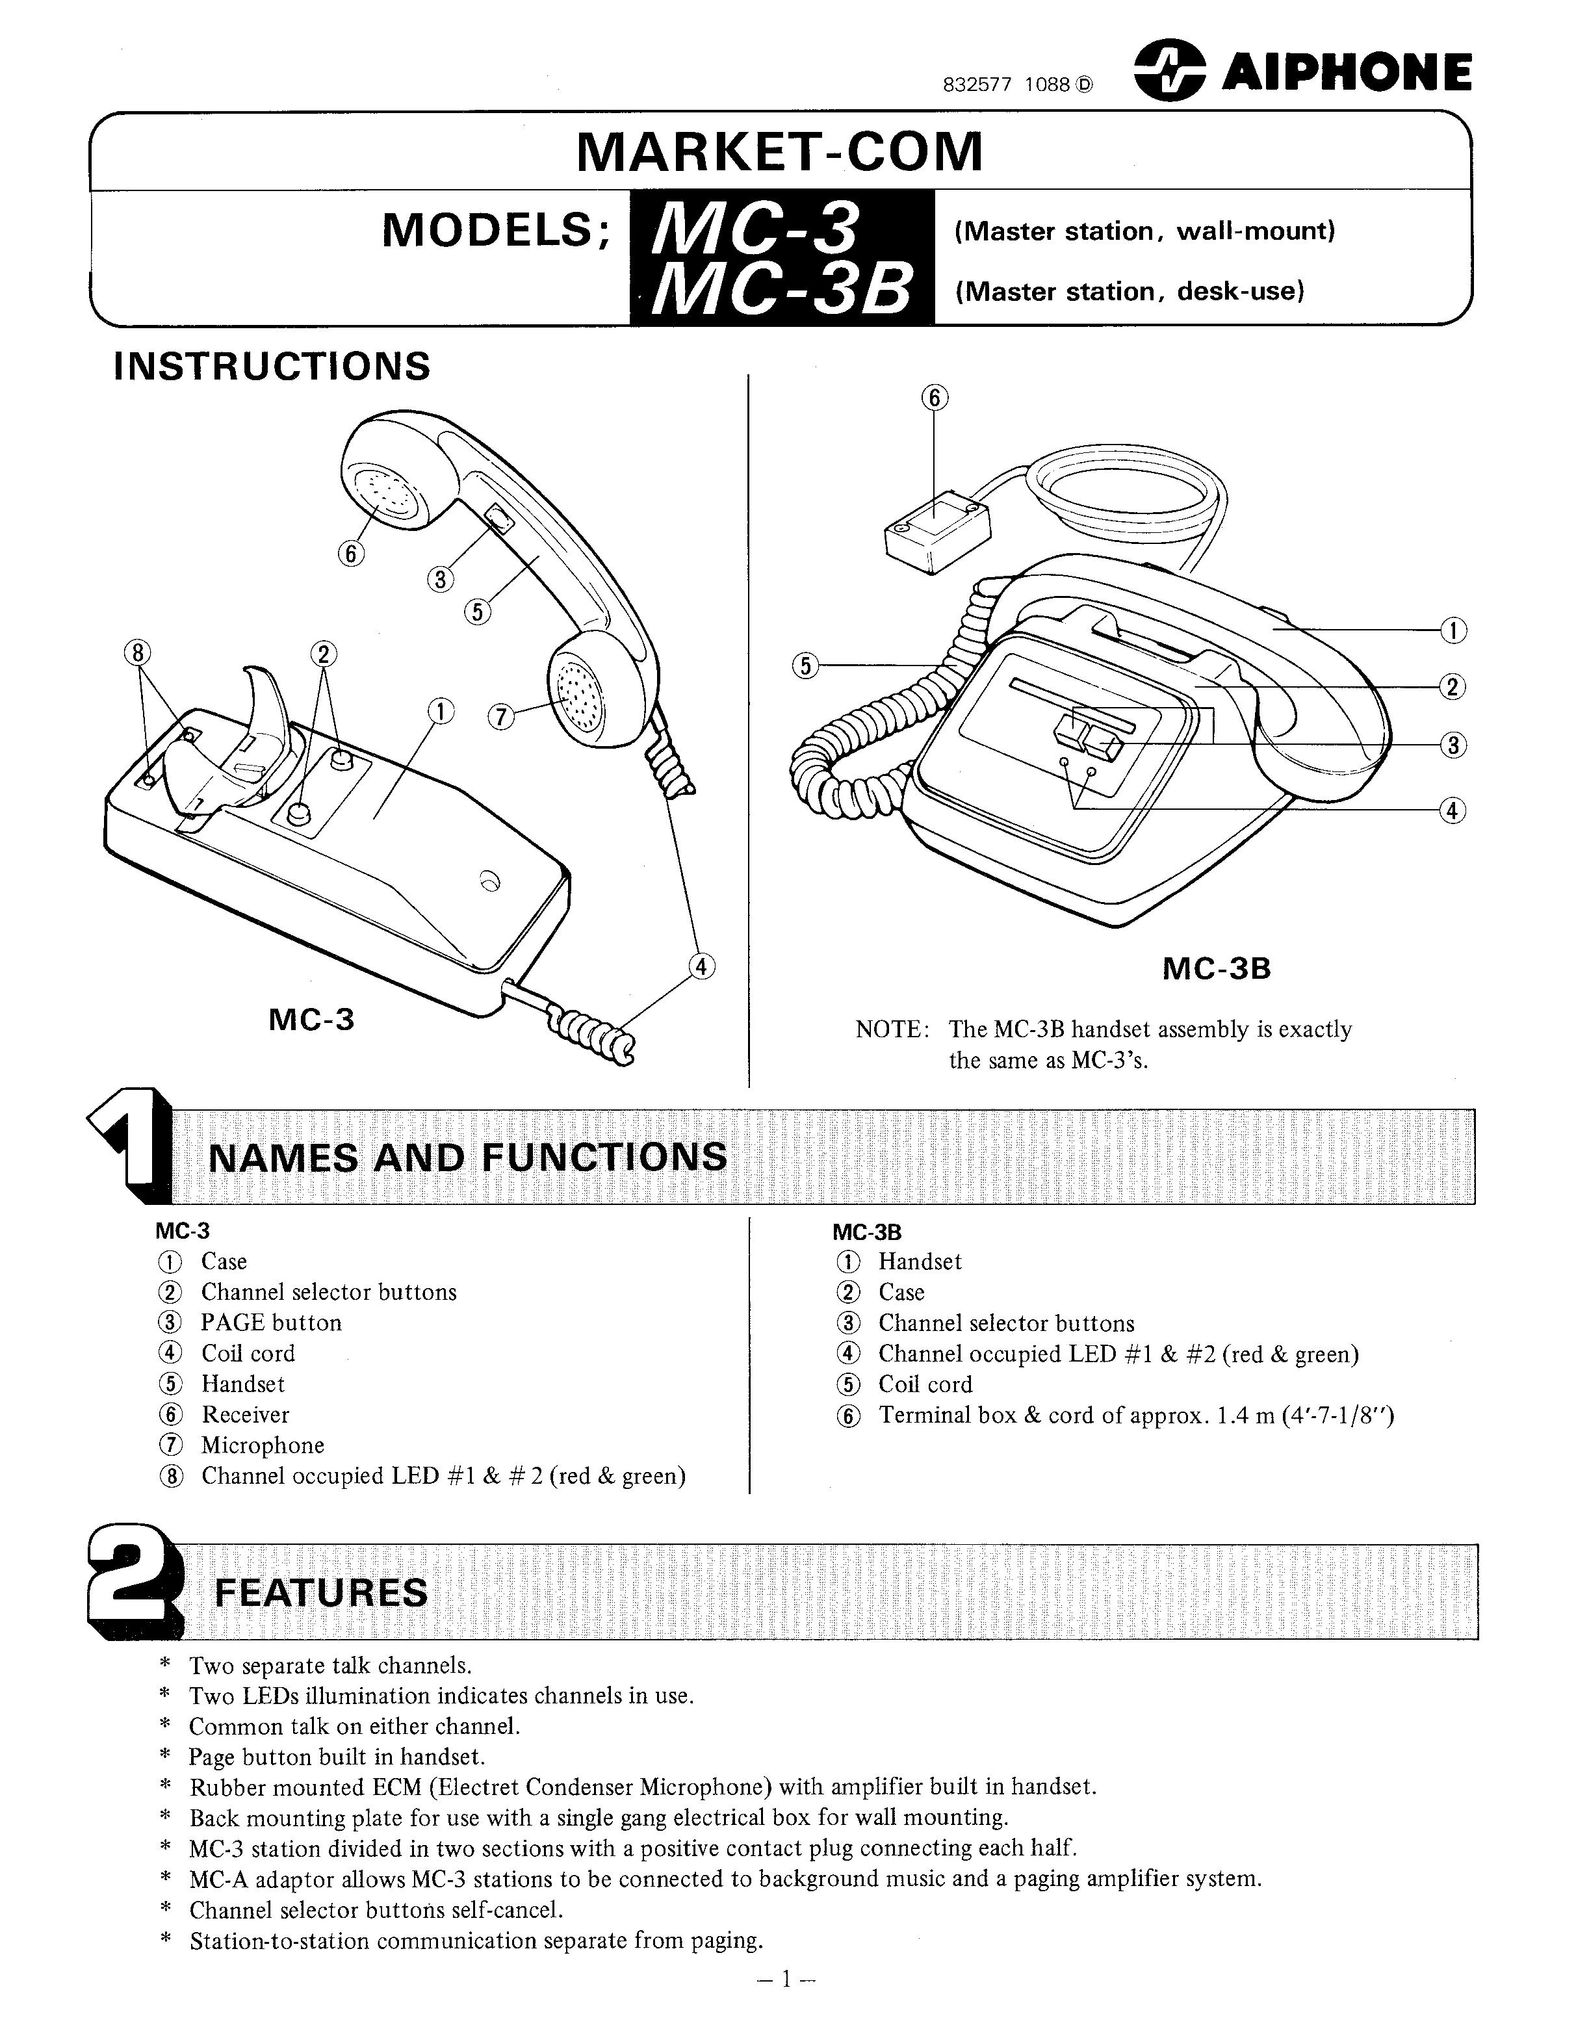 Aiphone MC-3B Telephone User Manual